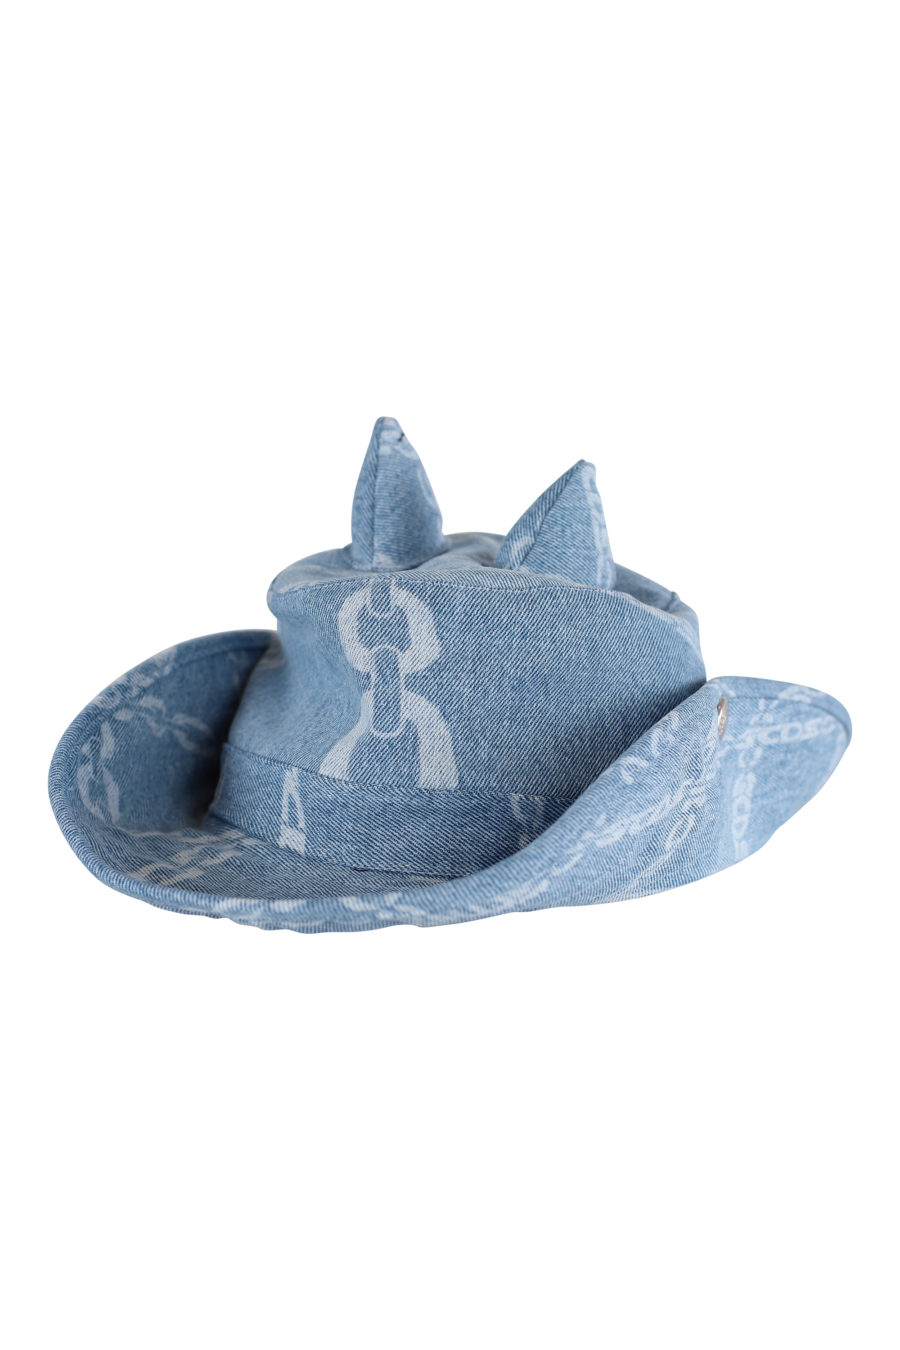 Sombrero azul denim - IMG 1520